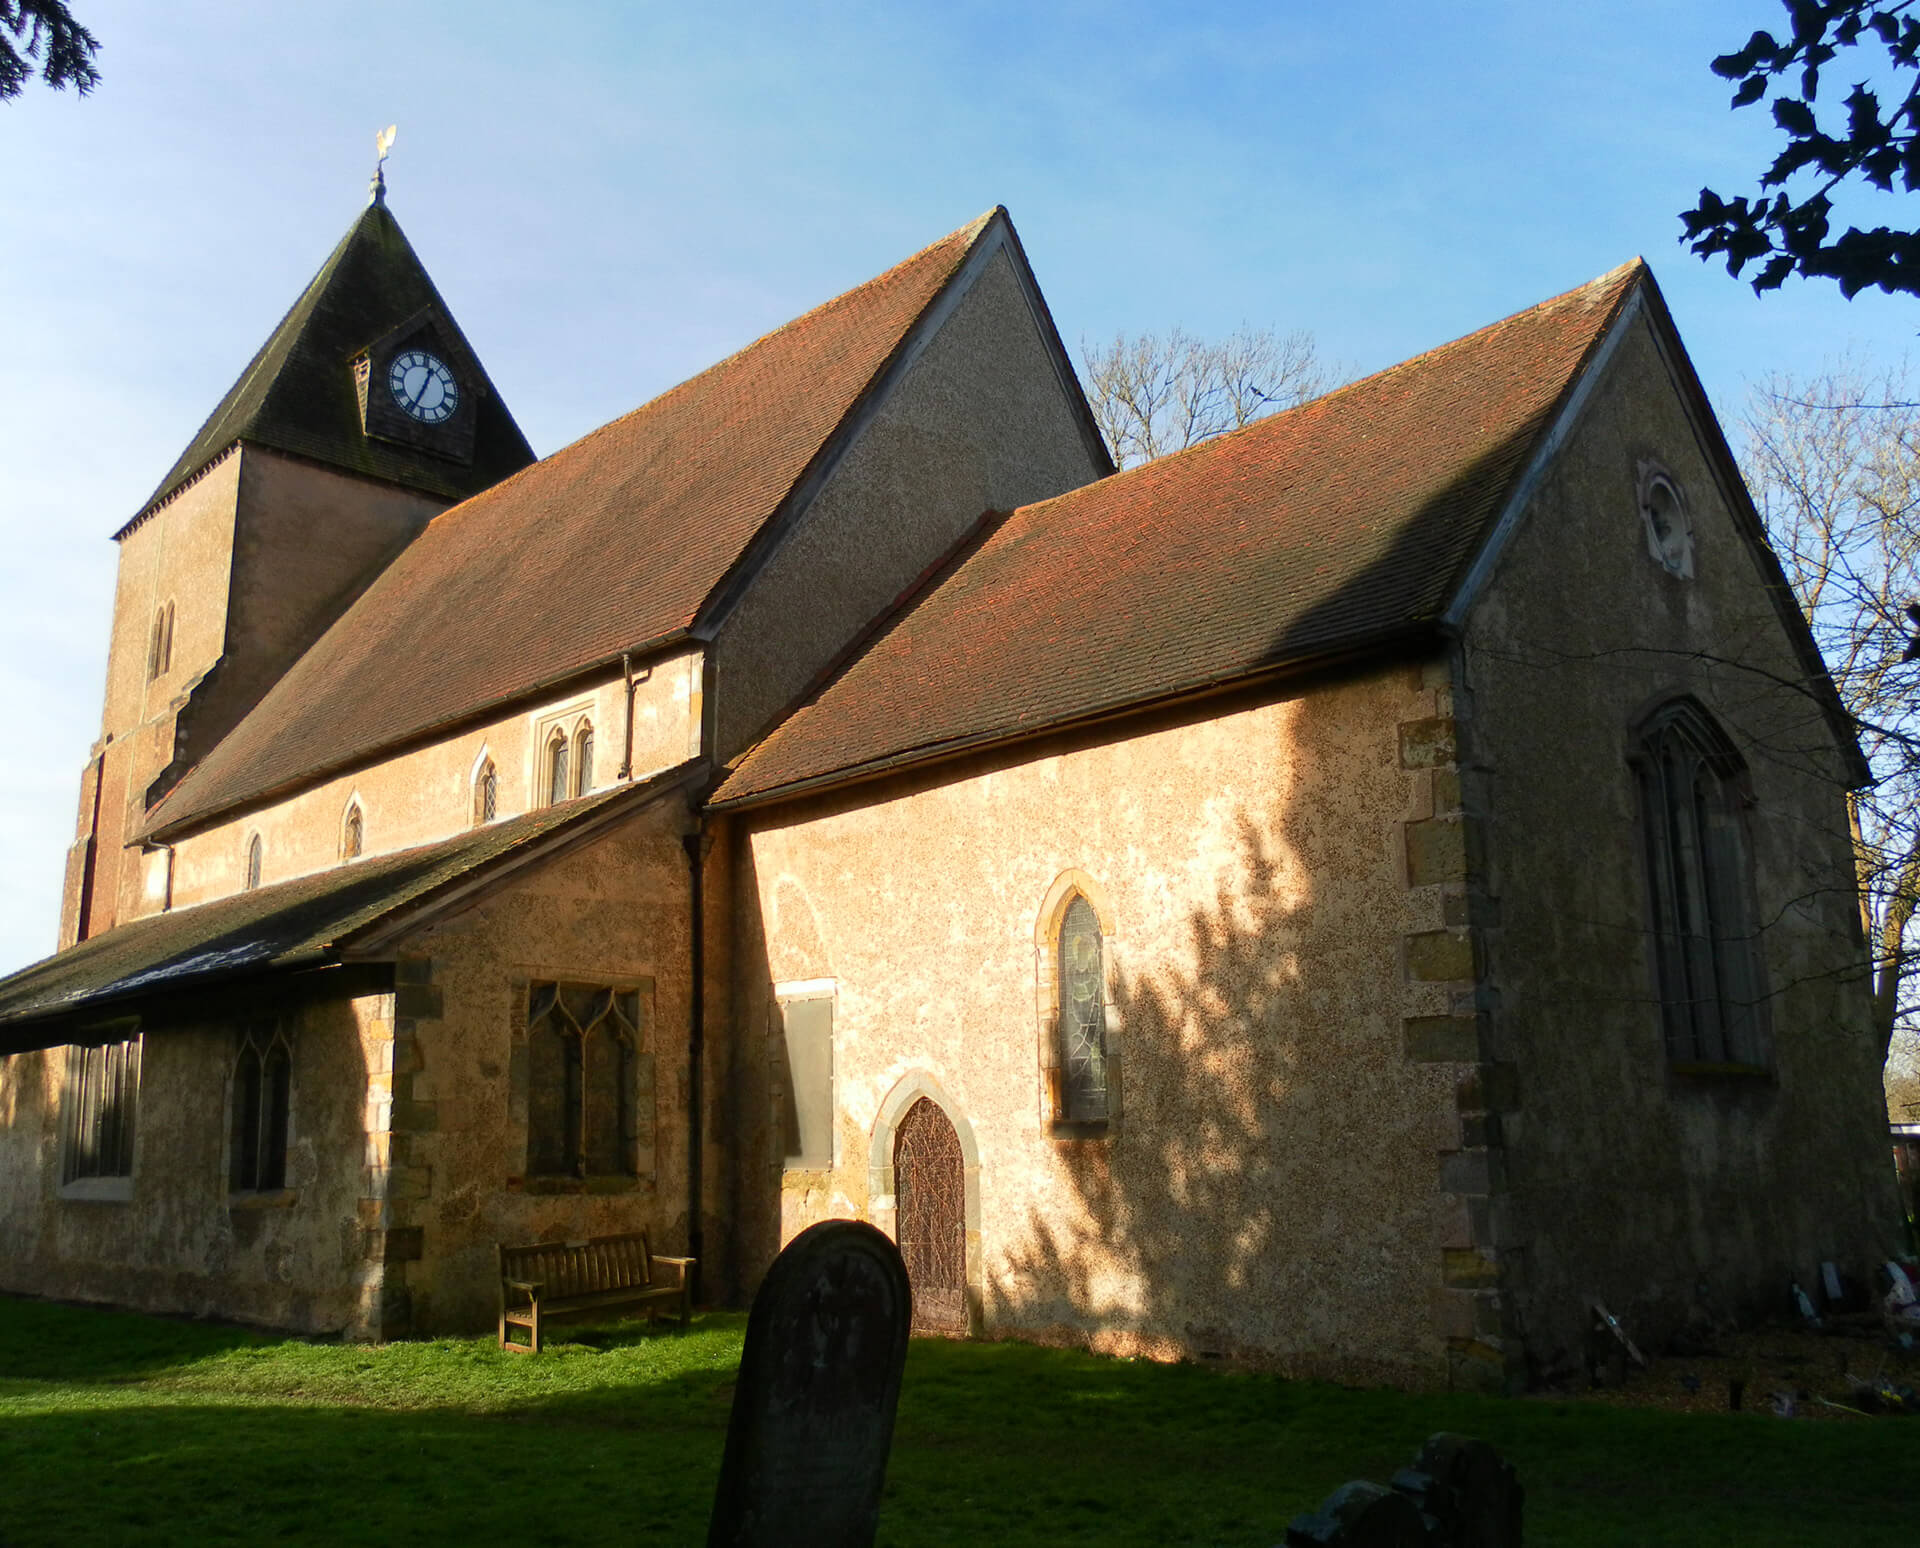 St Margaret's church, Ifield